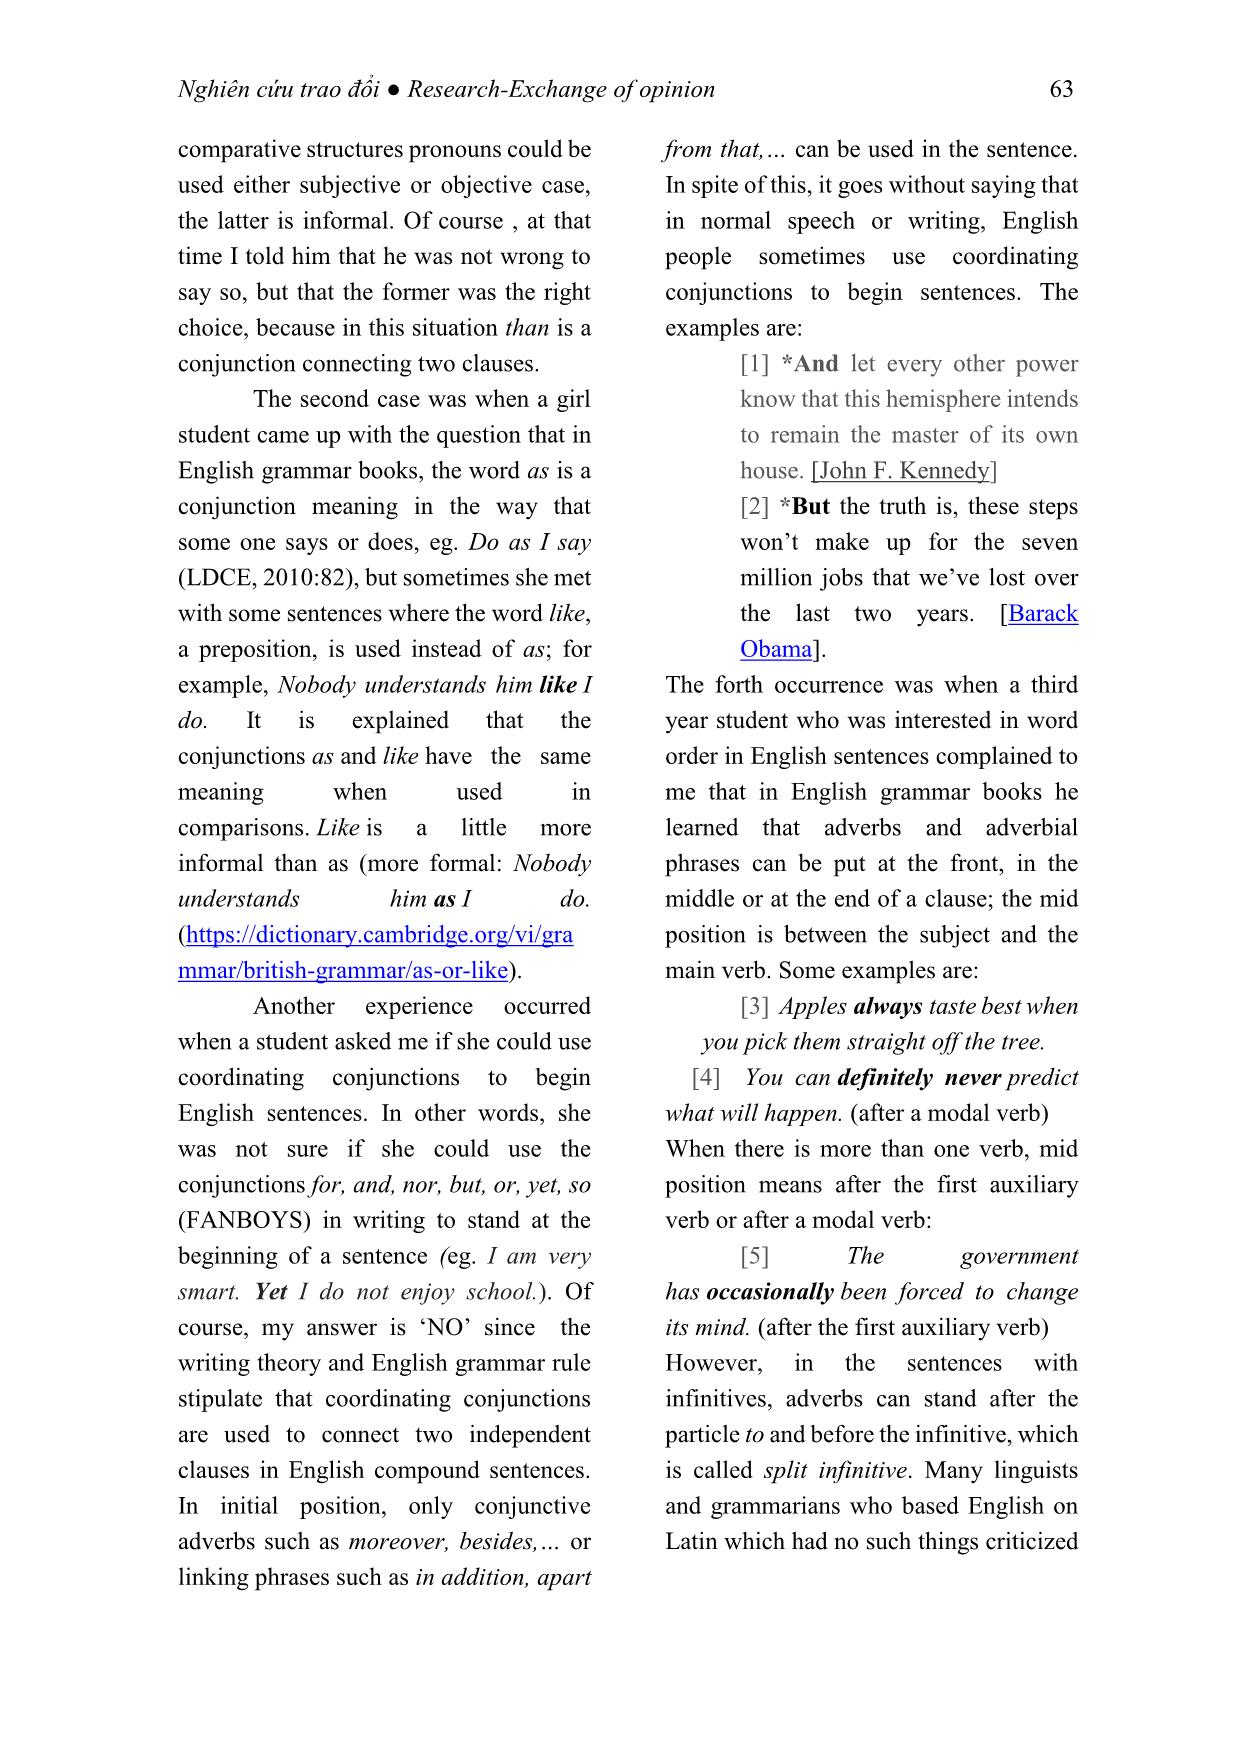 Descriptive and prescriptive grammar in teaching English trang 2